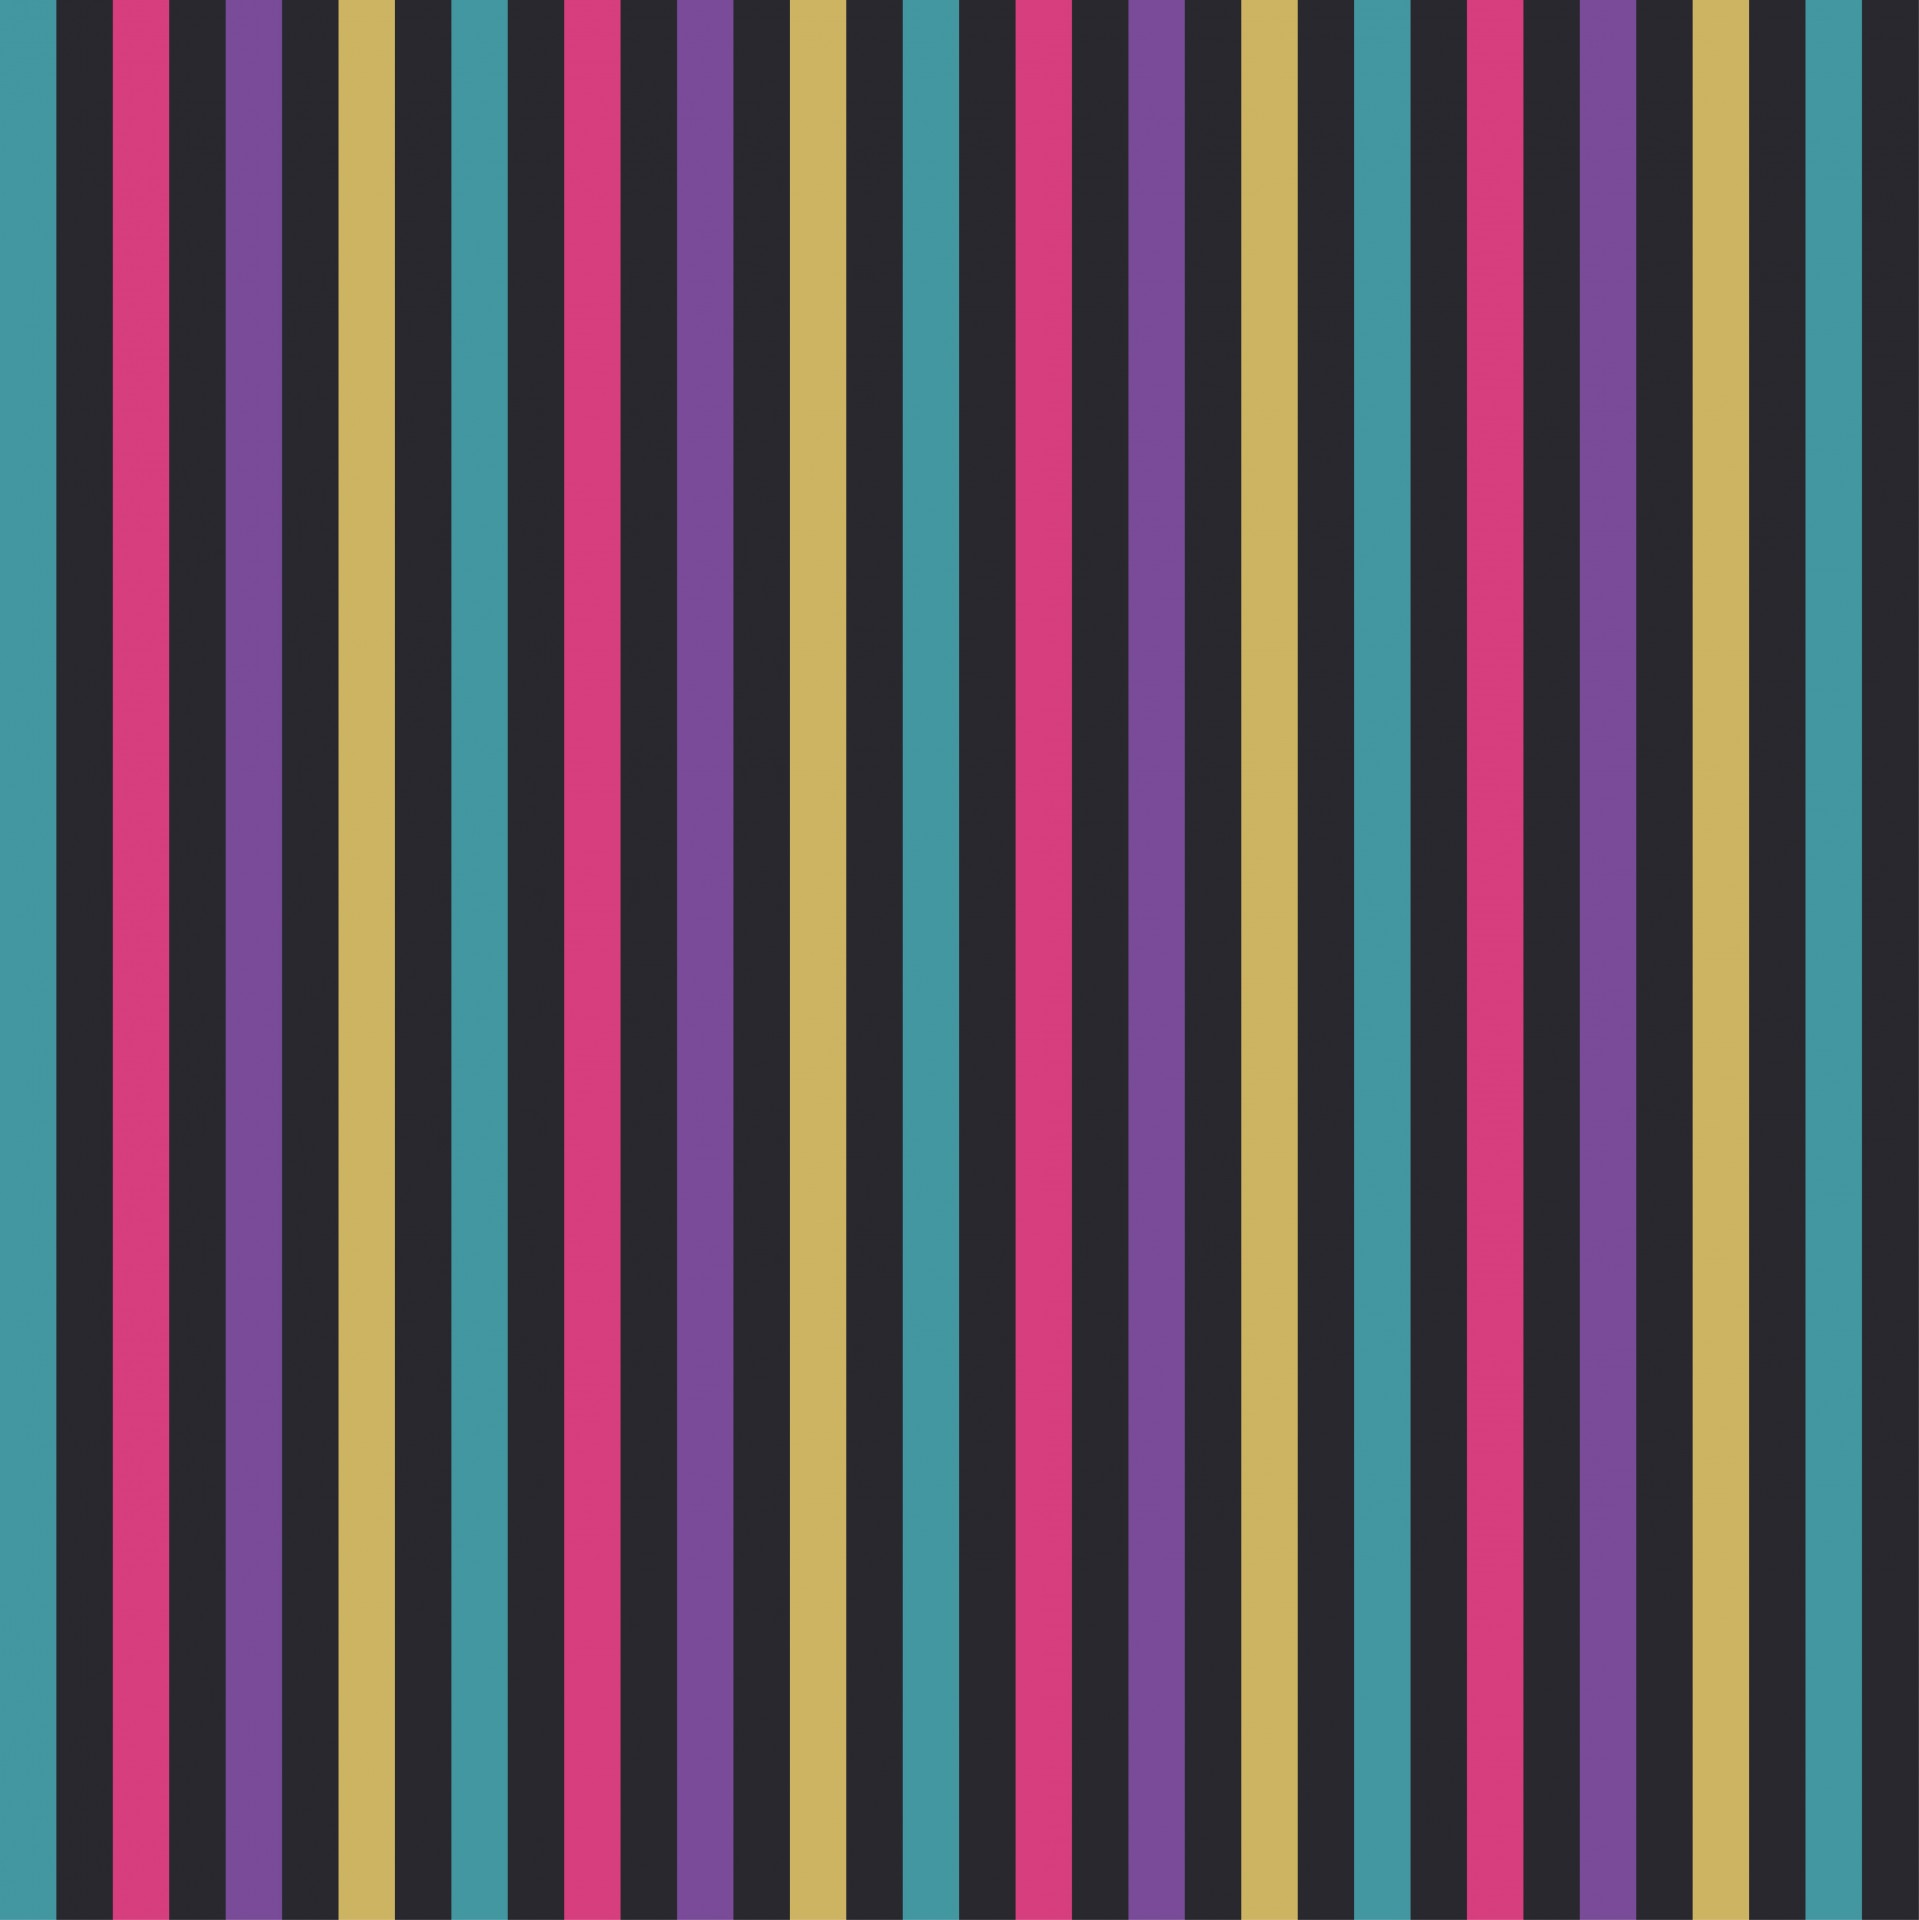 https://storage.needpix.com/rsynced_images/stripes-colorful-background-1376774098Yv5.jpg